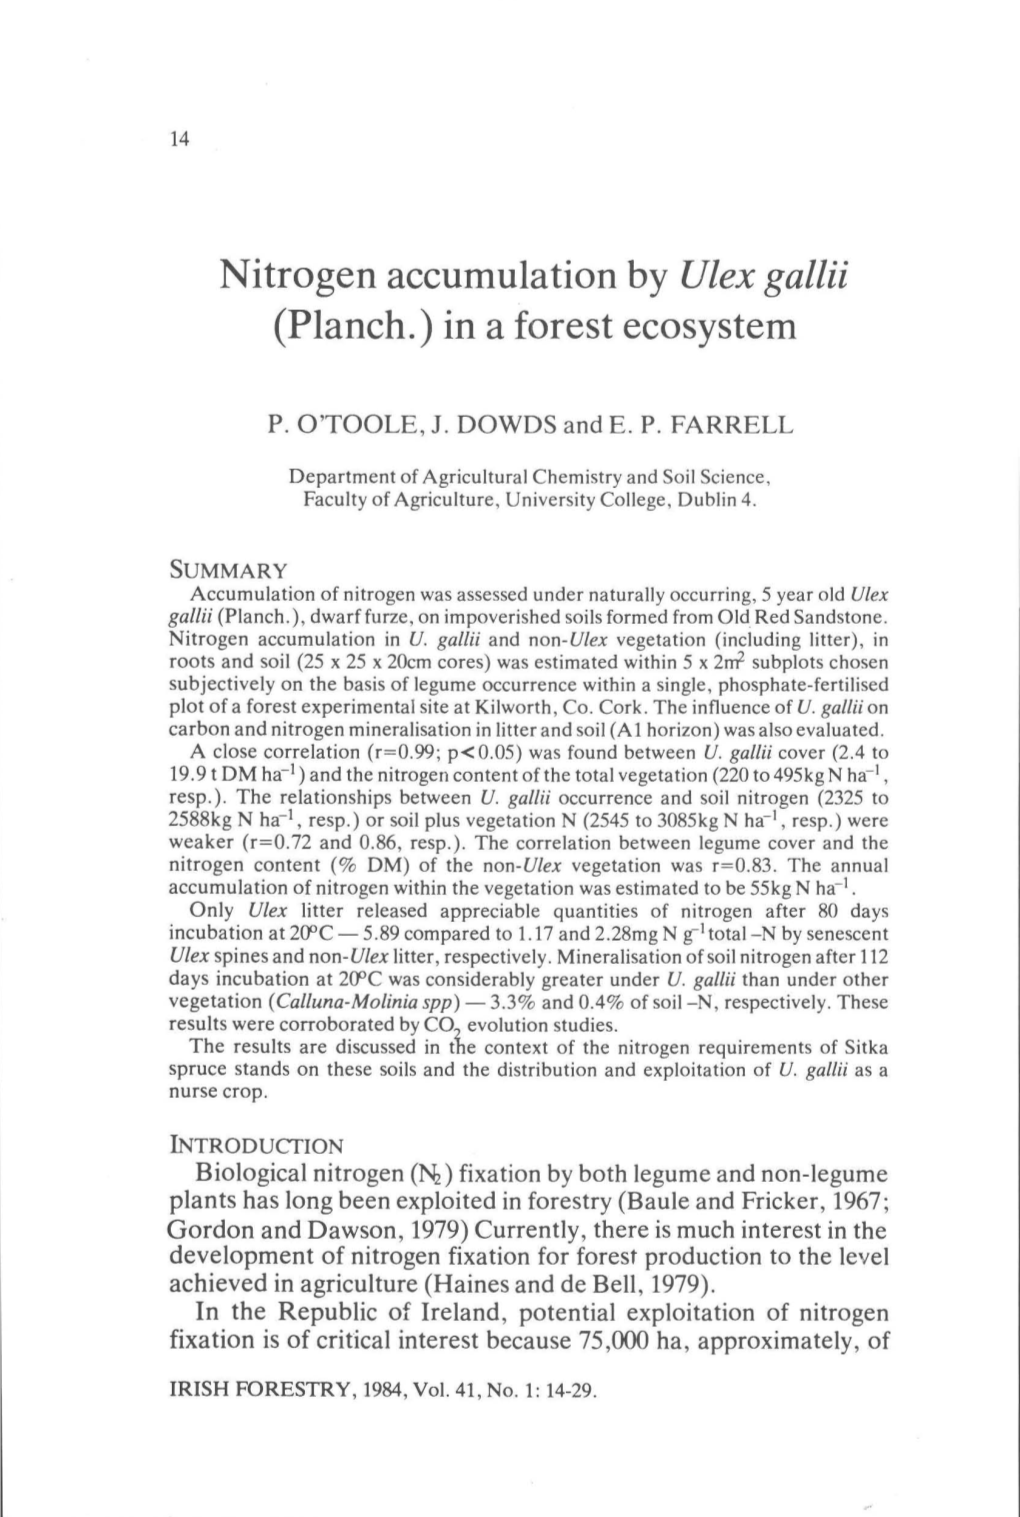 Nitrogen Accumulation by Ulex Gallii (Planch.) in a Forest Ecosystem